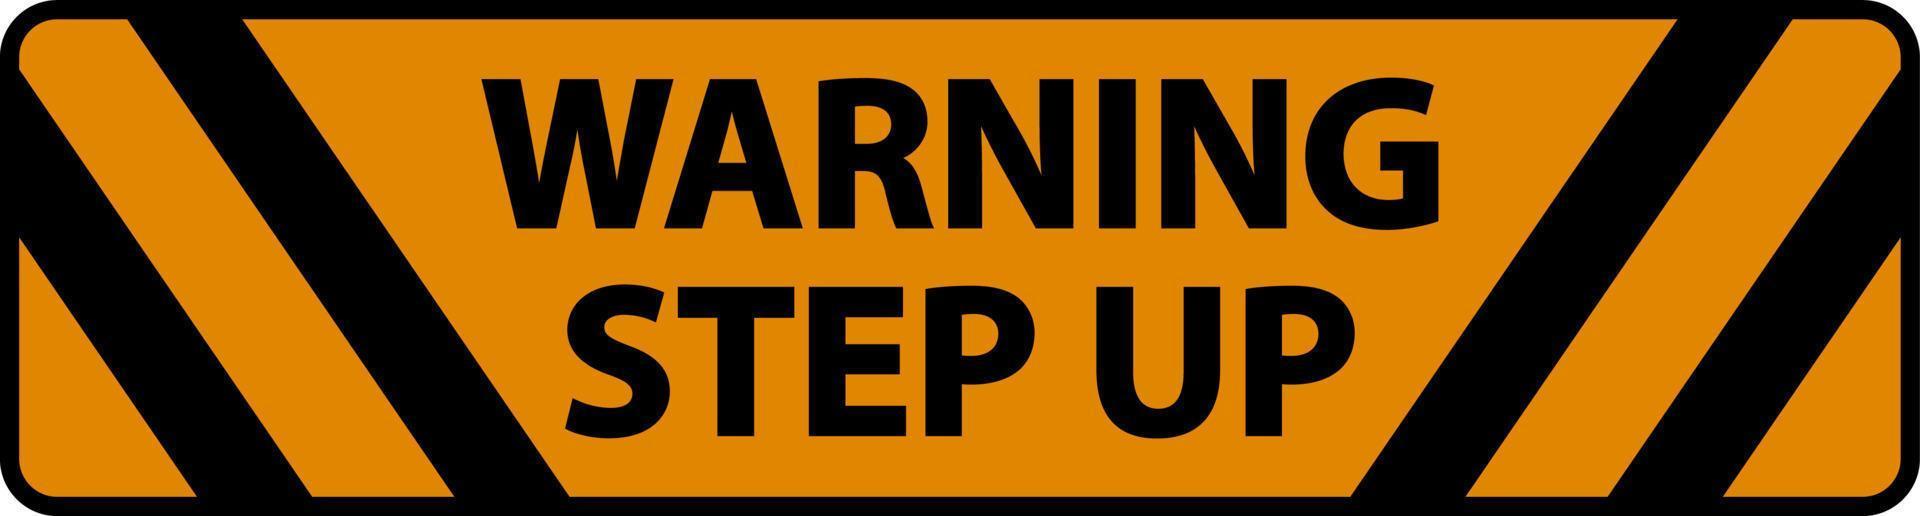 avertissement step up floor sign sur fond blanc vecteur